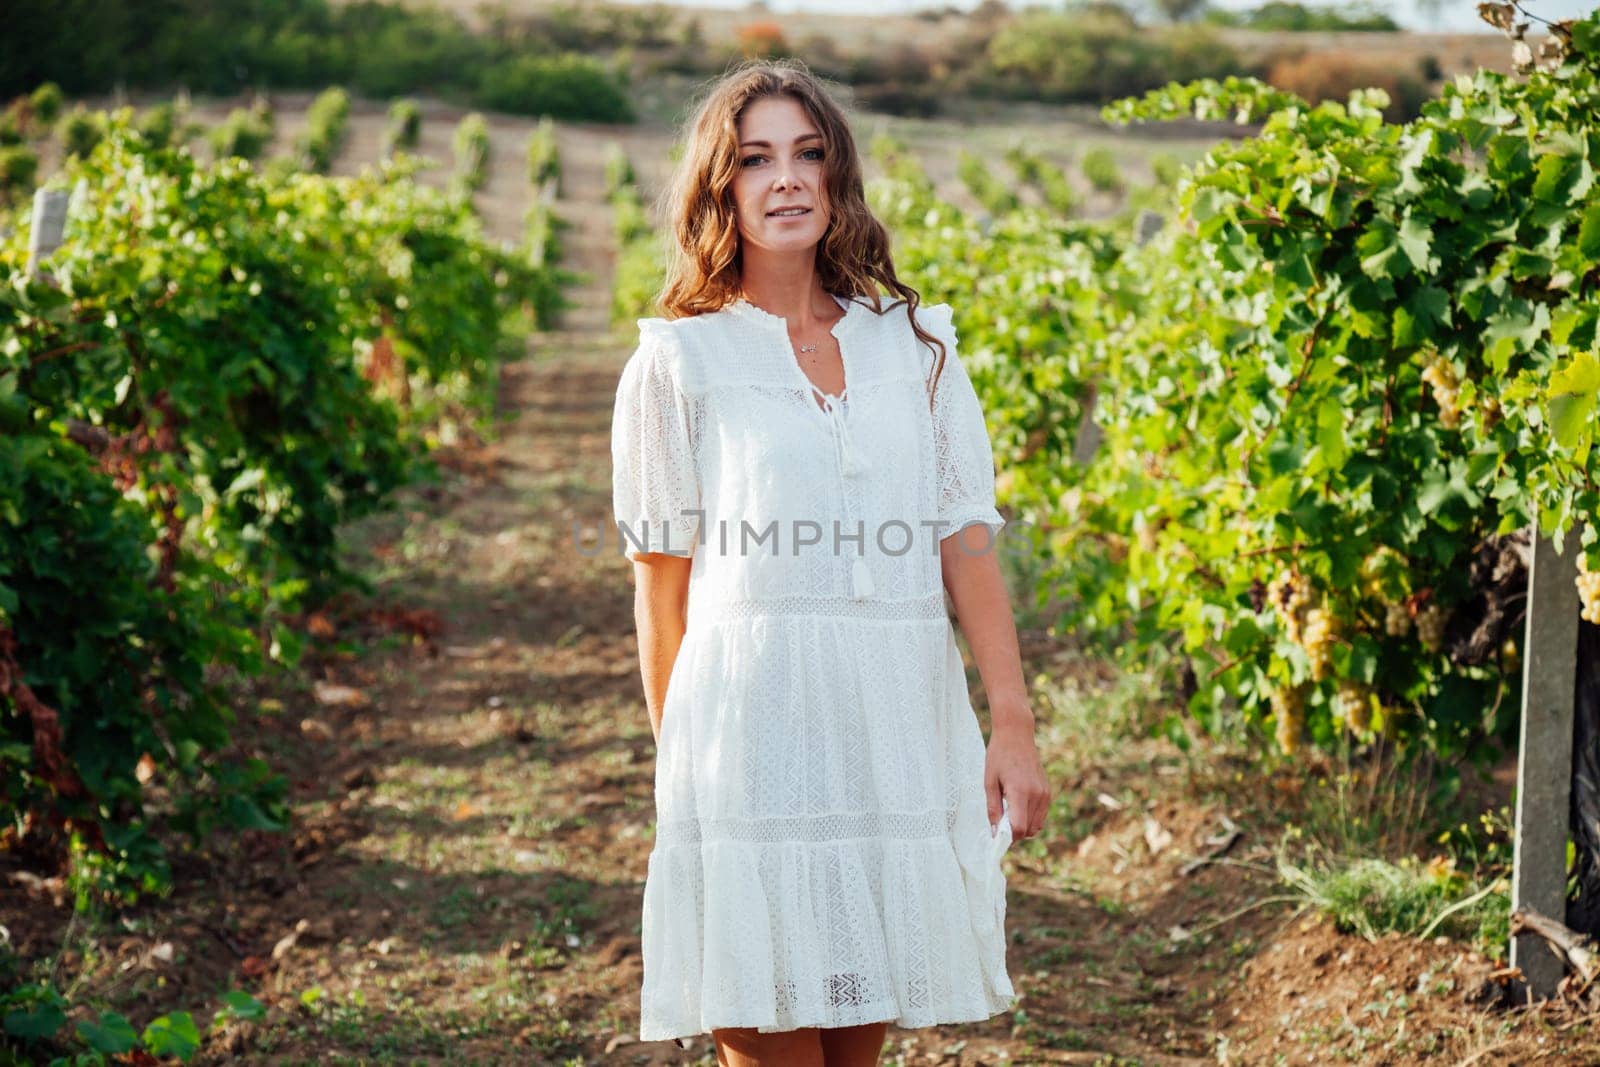 Beautiful woman in white dresses vineyards harvest